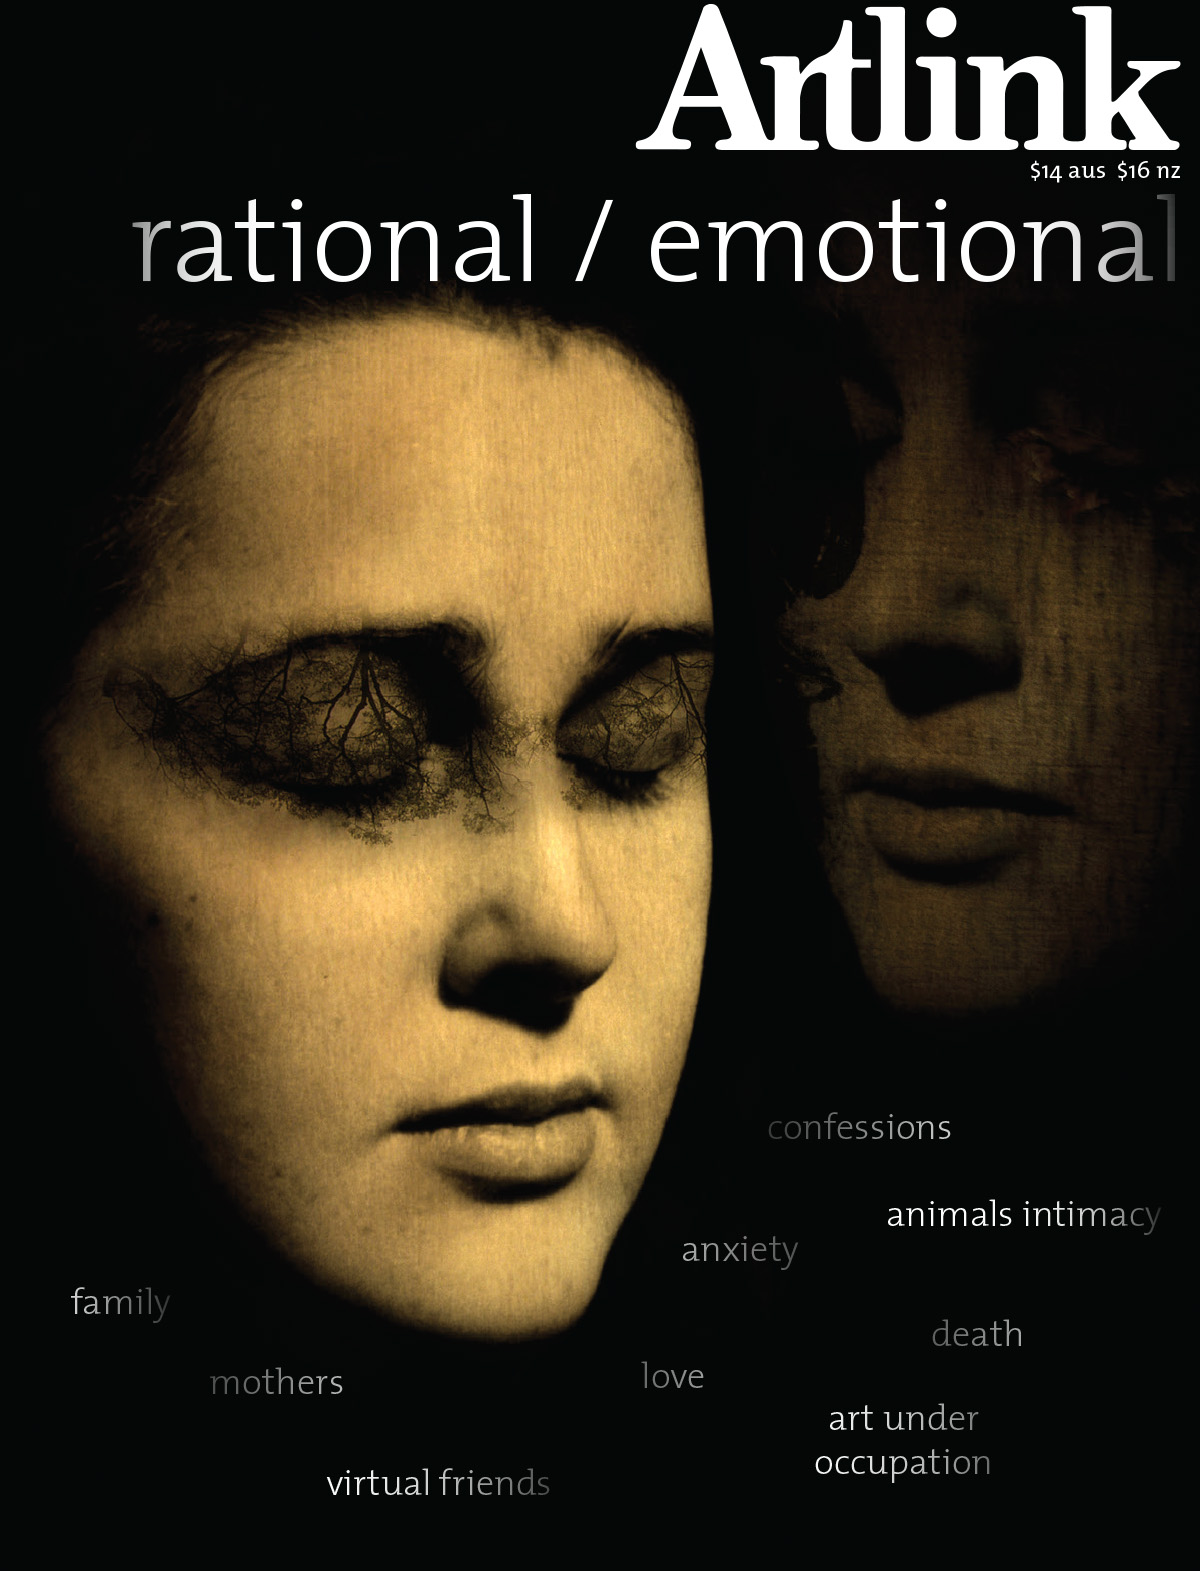 Issue 29:3 | September 2009 | Rational / Emotional